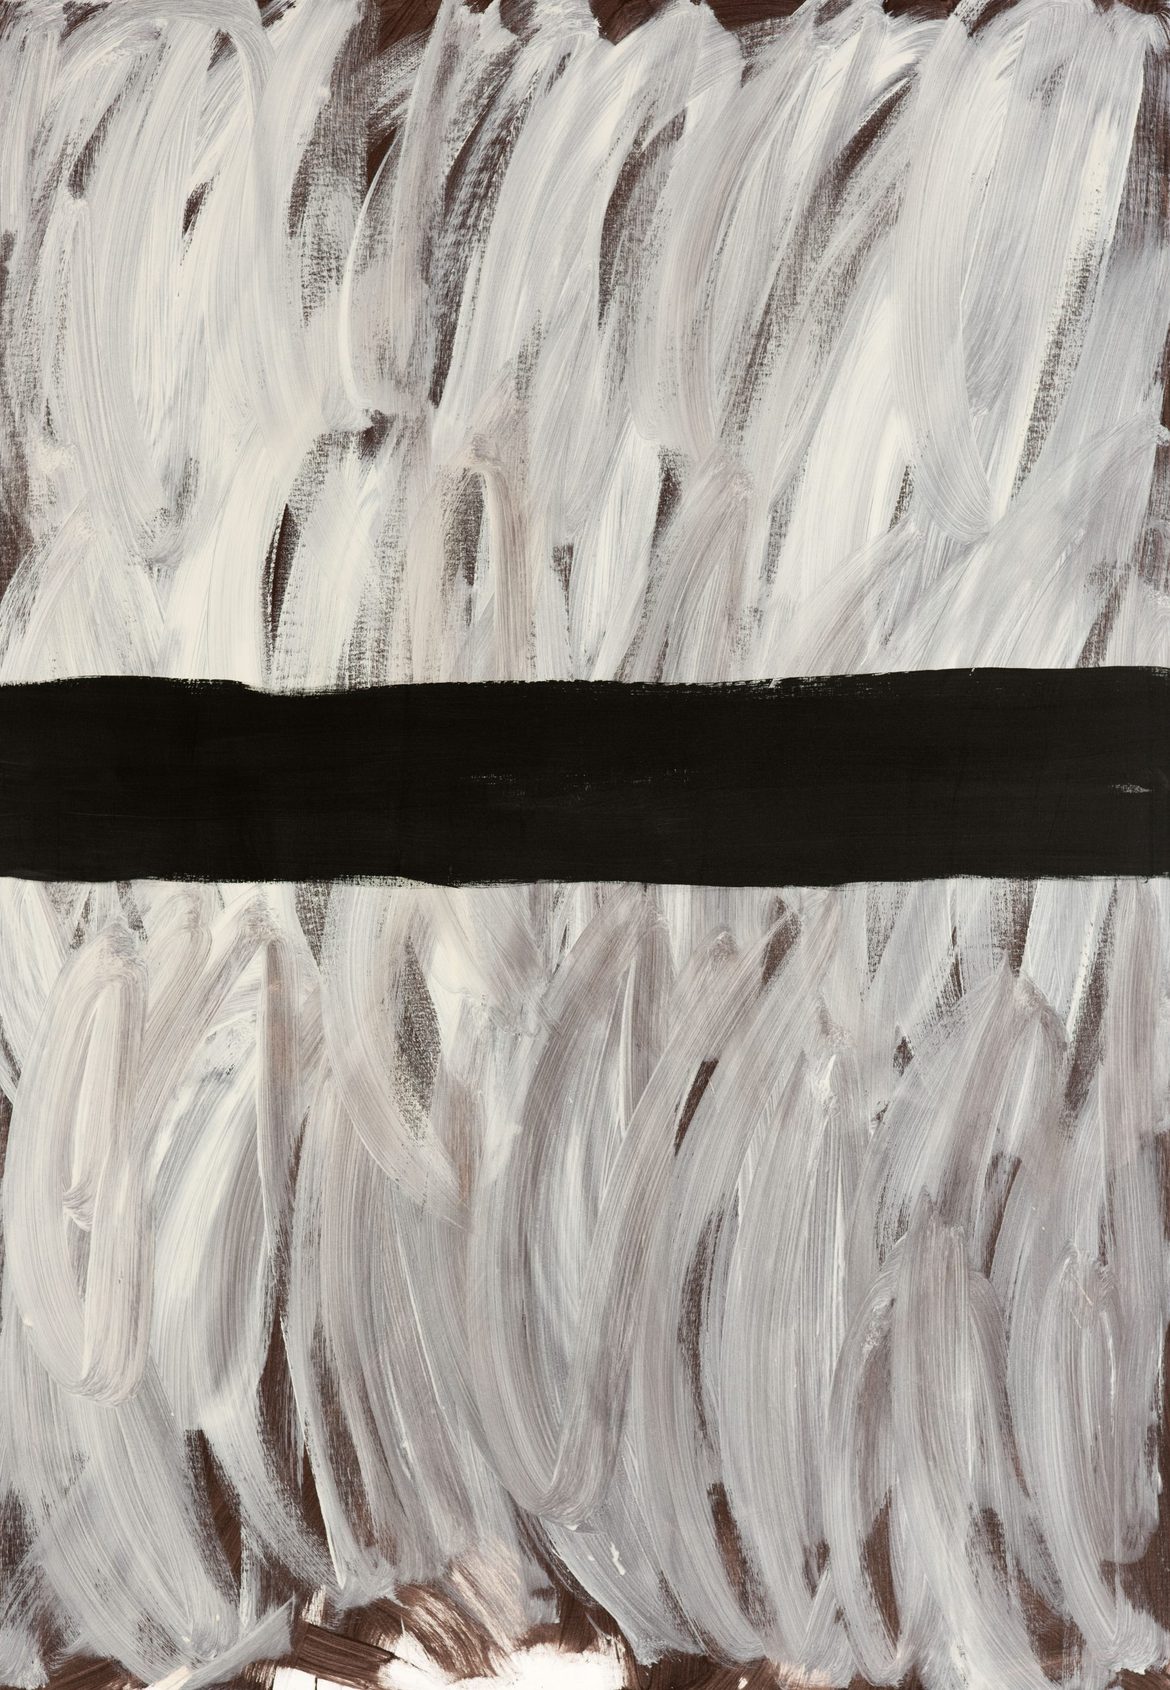 ‘In Retrospect’, 2019, acrylic on canvas, 153 x 107 cm